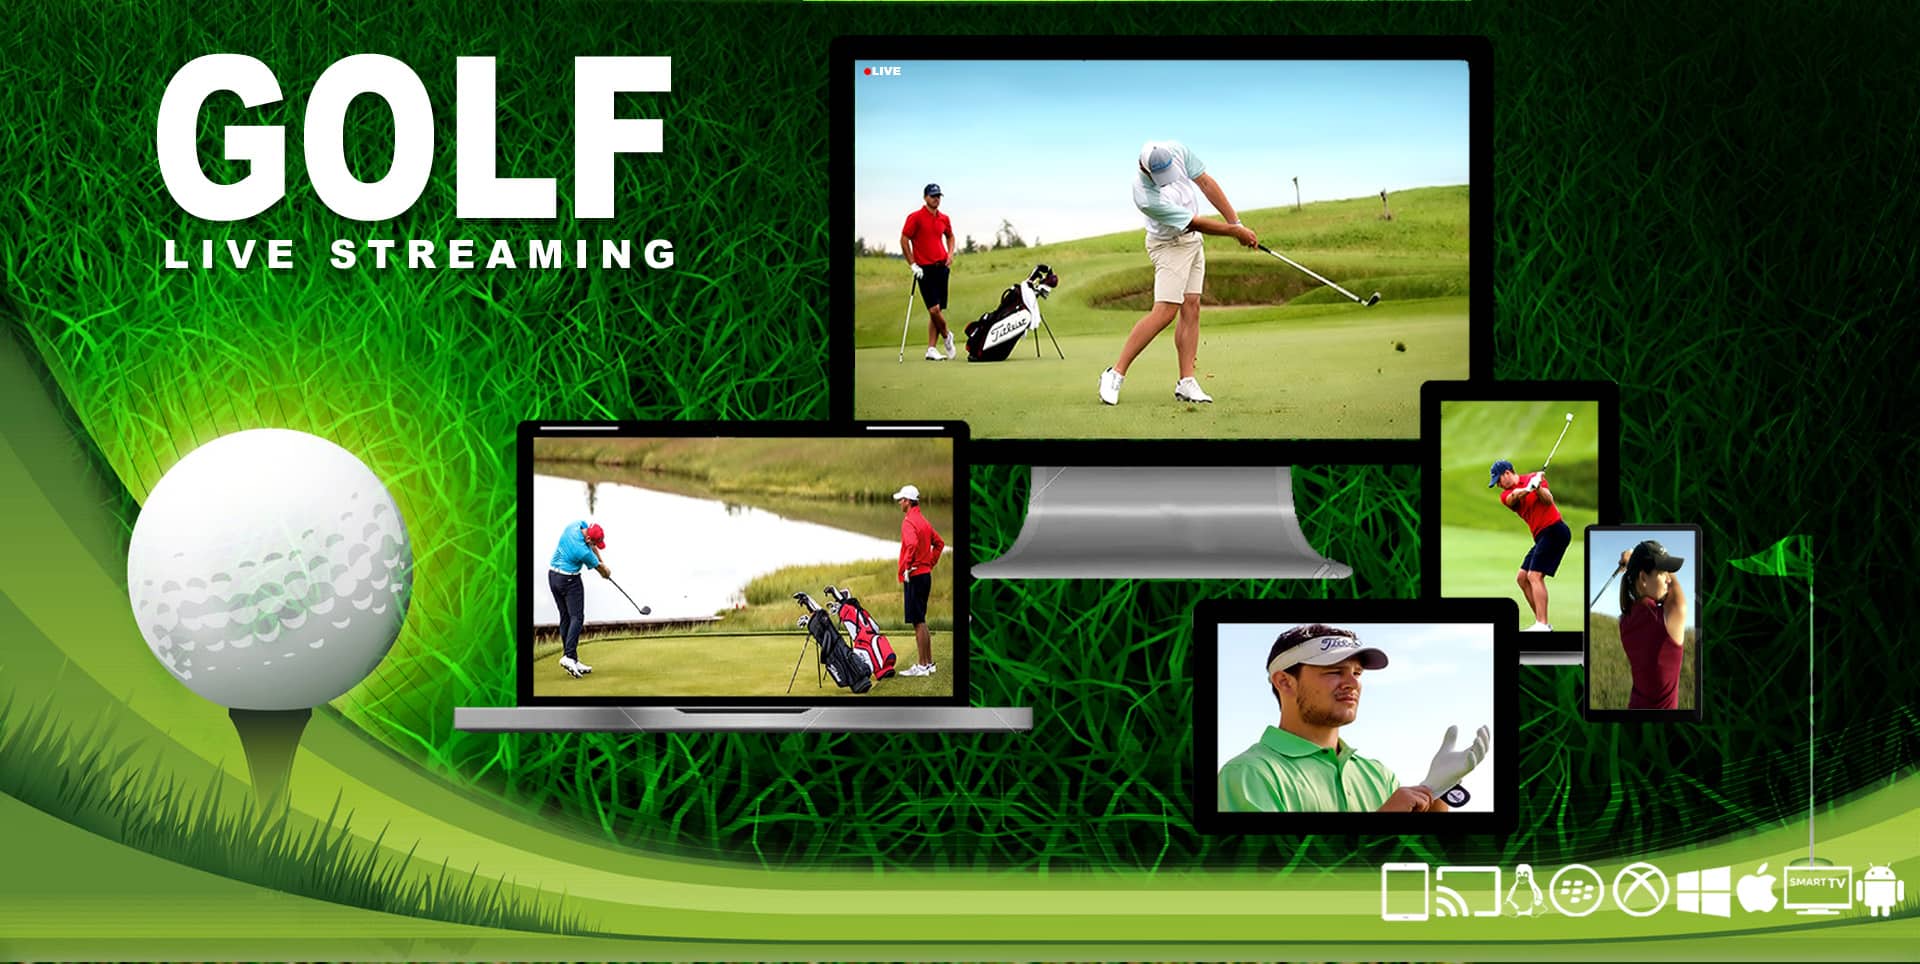 2016-fiji-international-golf-streaming-live